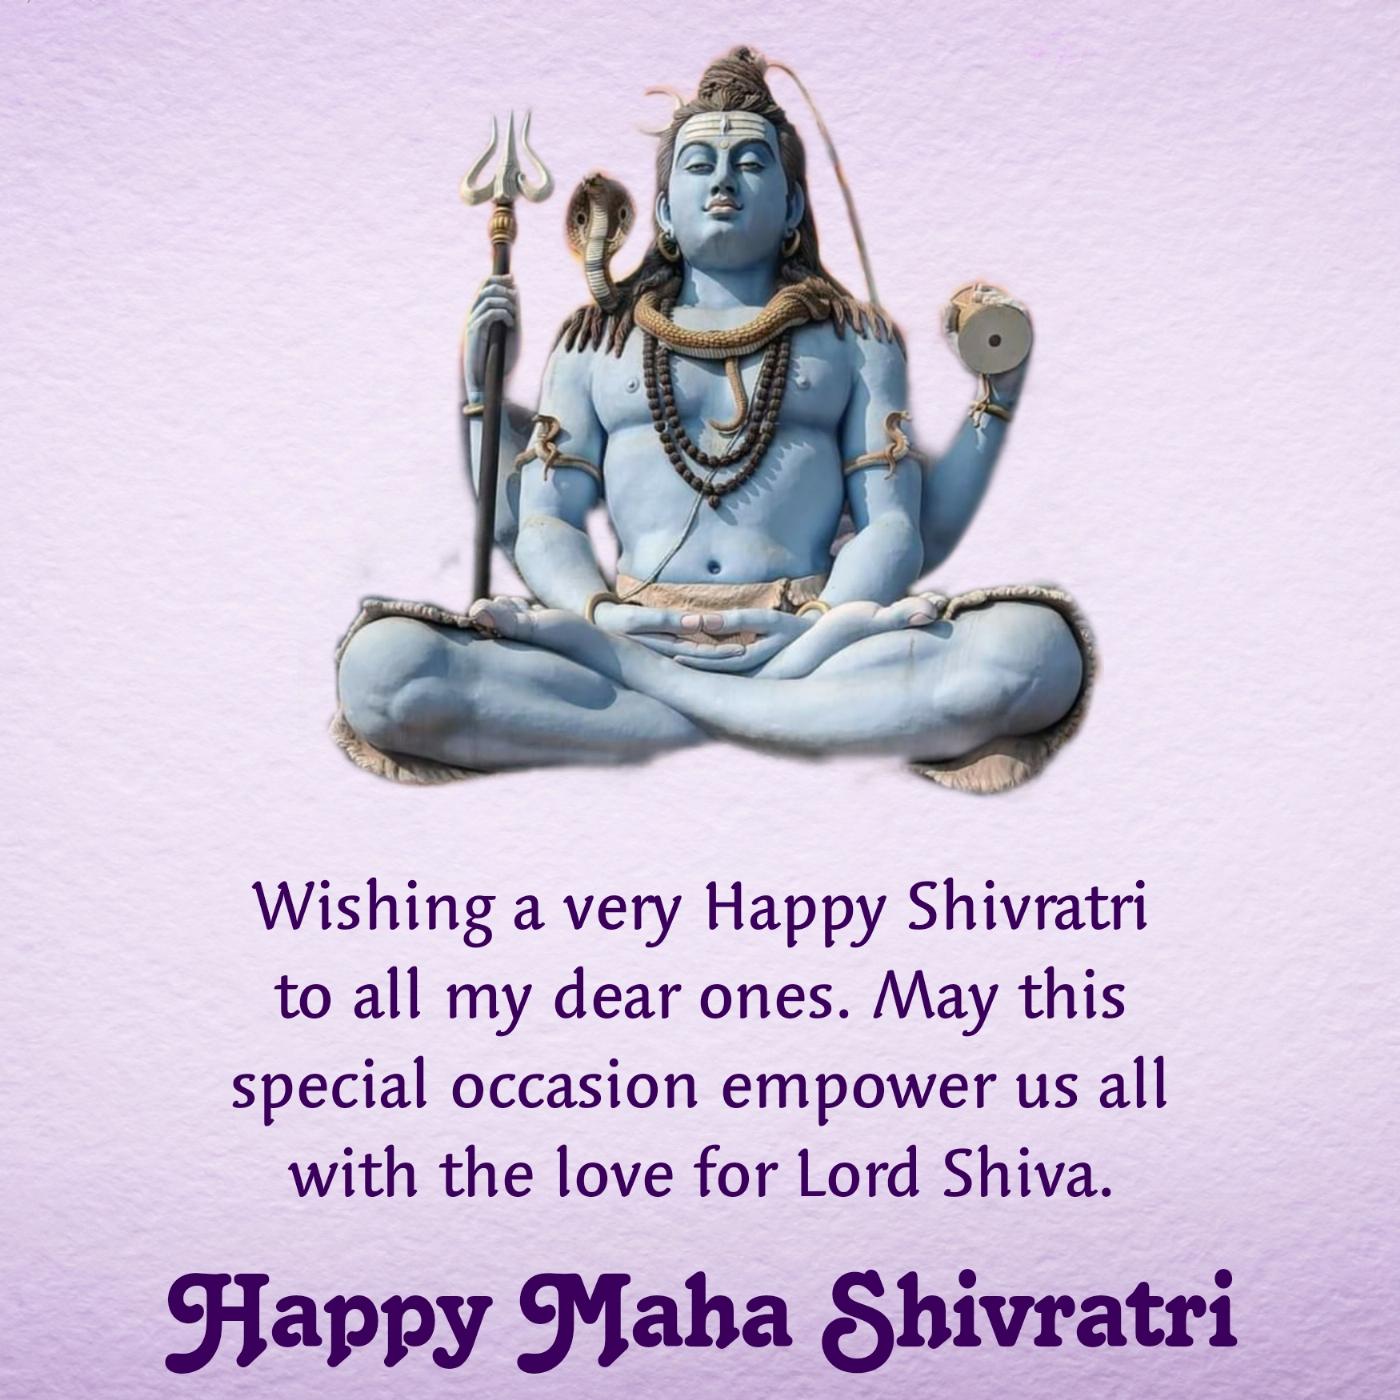 Wishing a very Happy Shivratri to all my dear ones